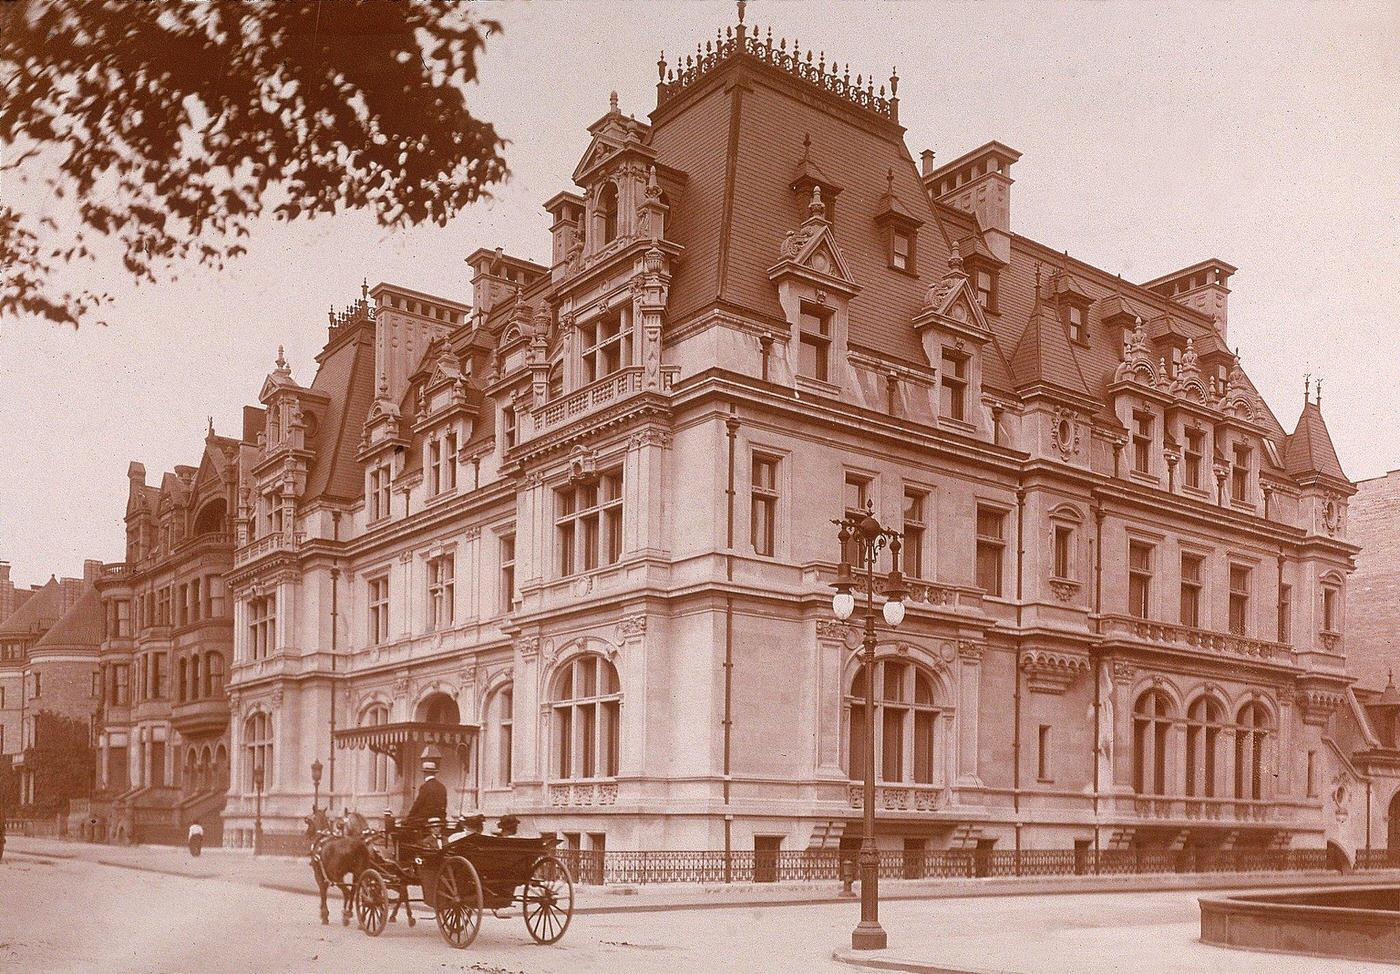 John Jacob Astor'S House On Fifth Avenue And 65Th Street, New York City, 1900S